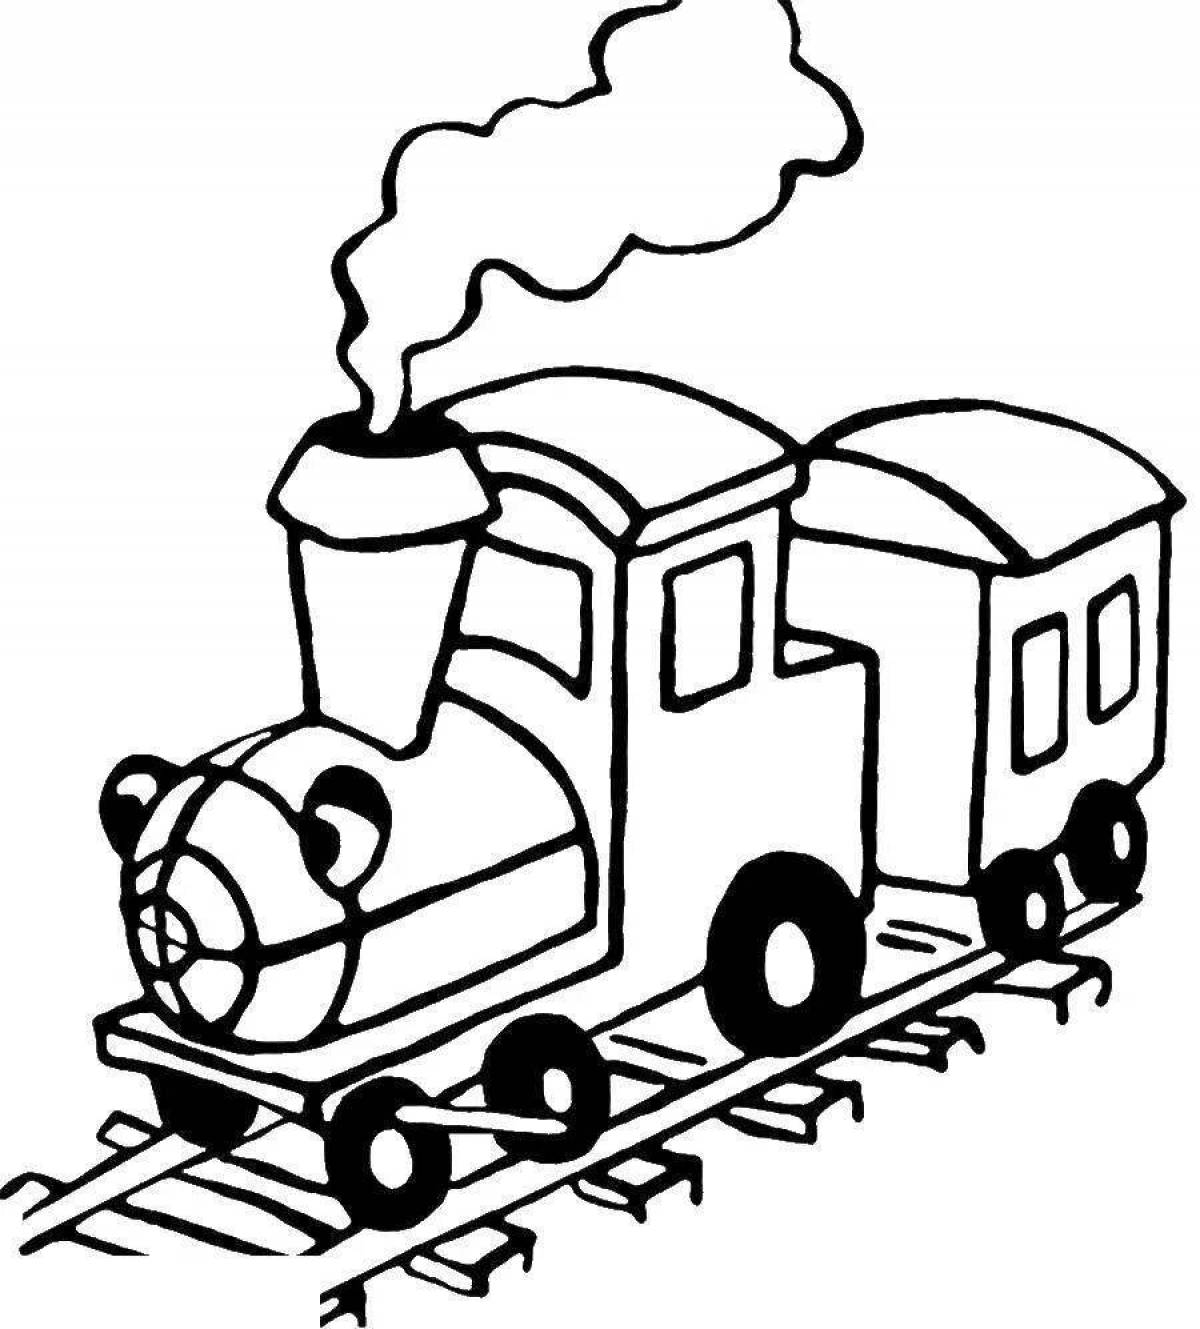 Luxury locomotives and trains